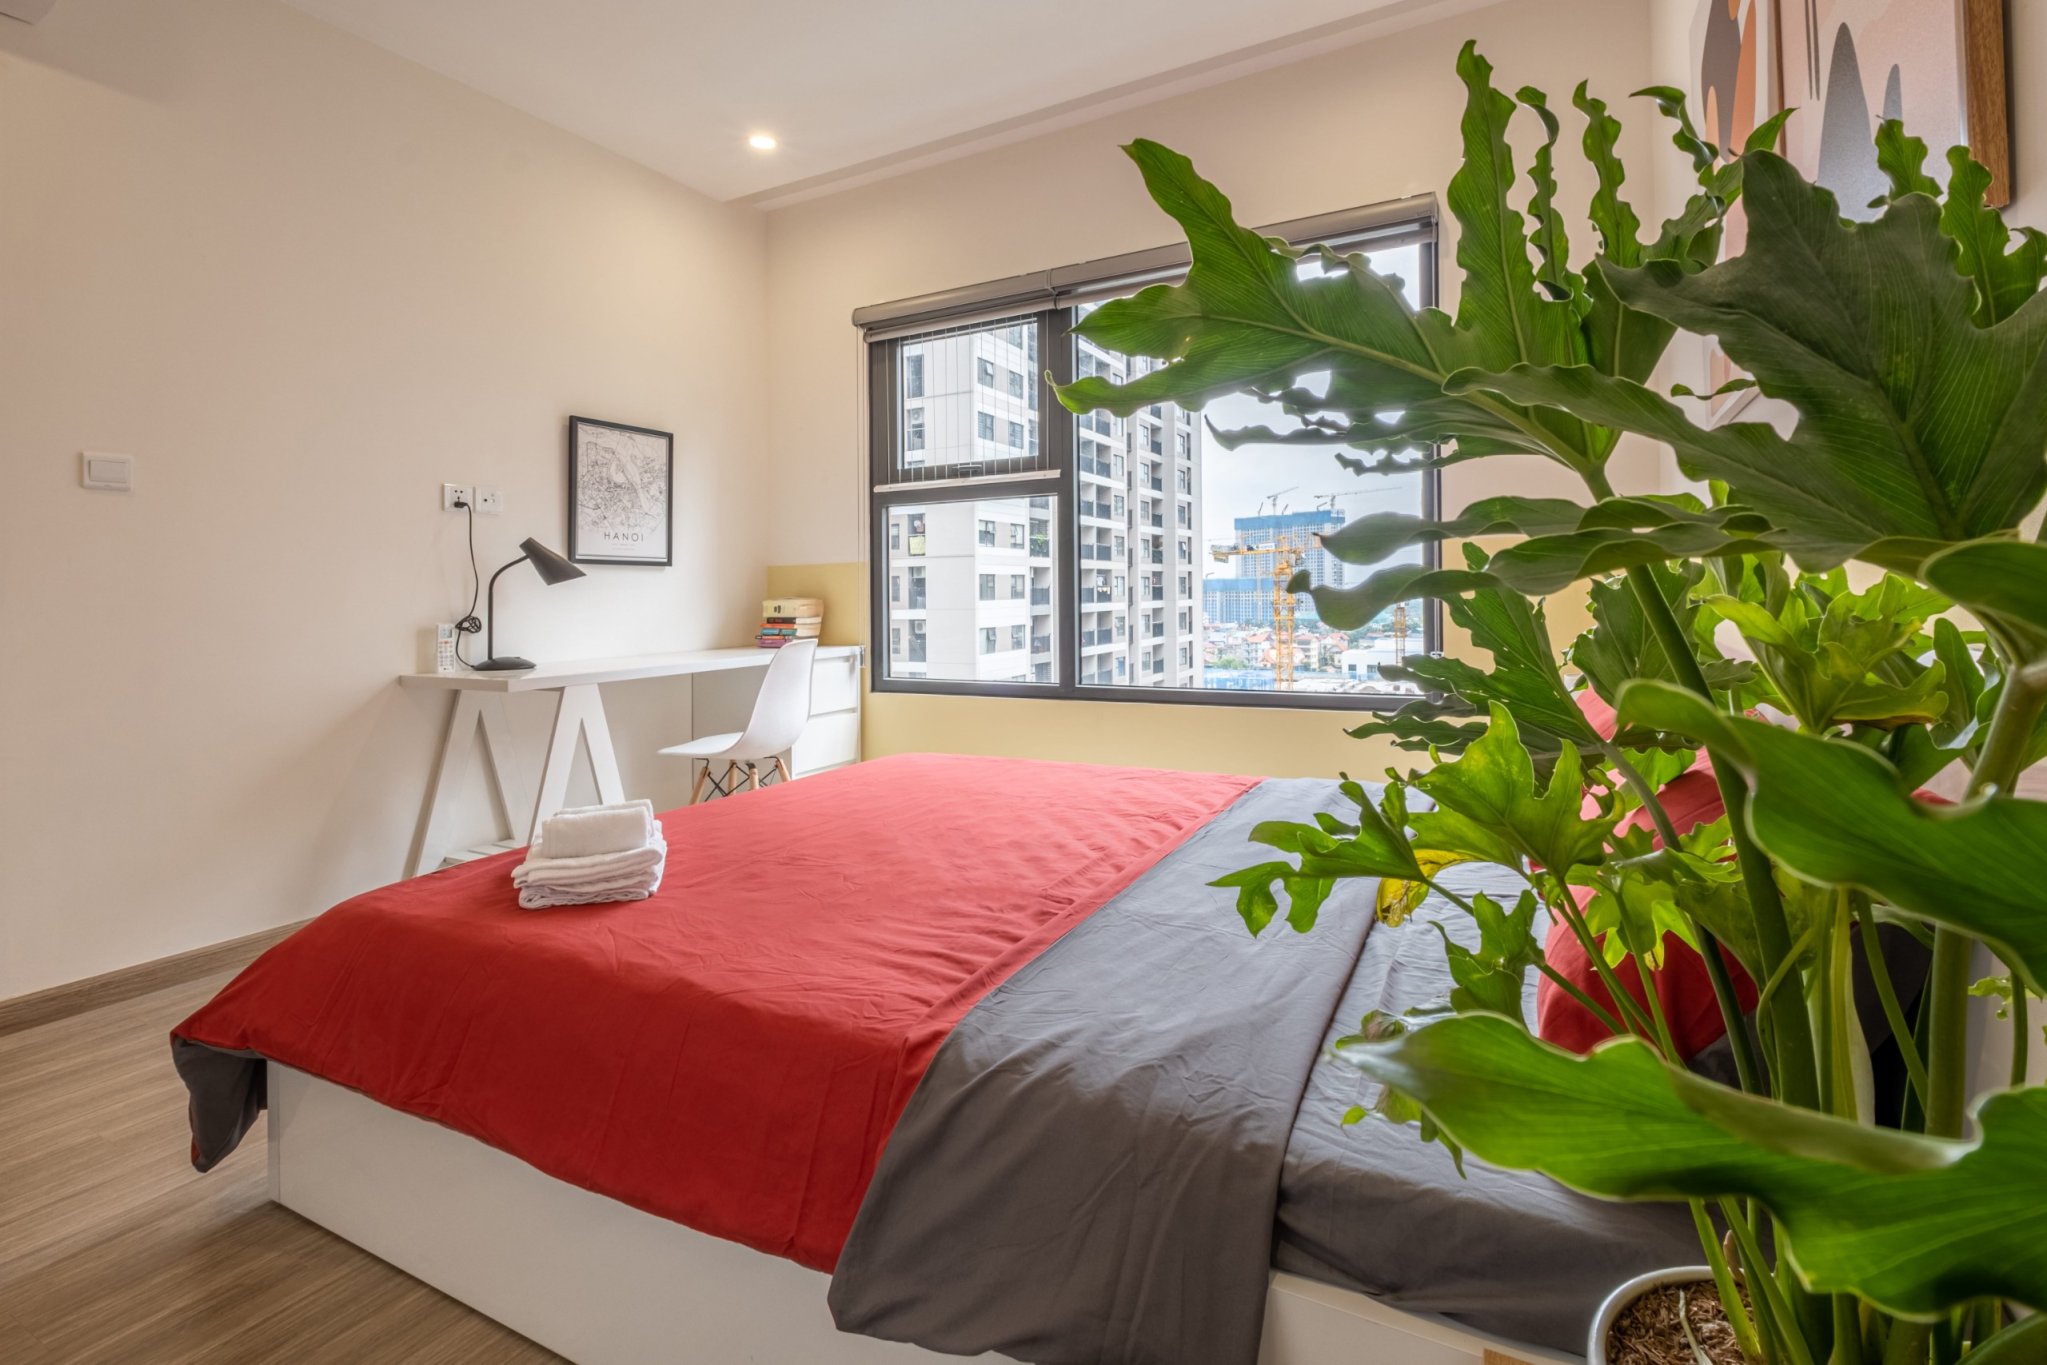 3 bedroom apartment for rent in Vinhomes Ocean Park - good price 6